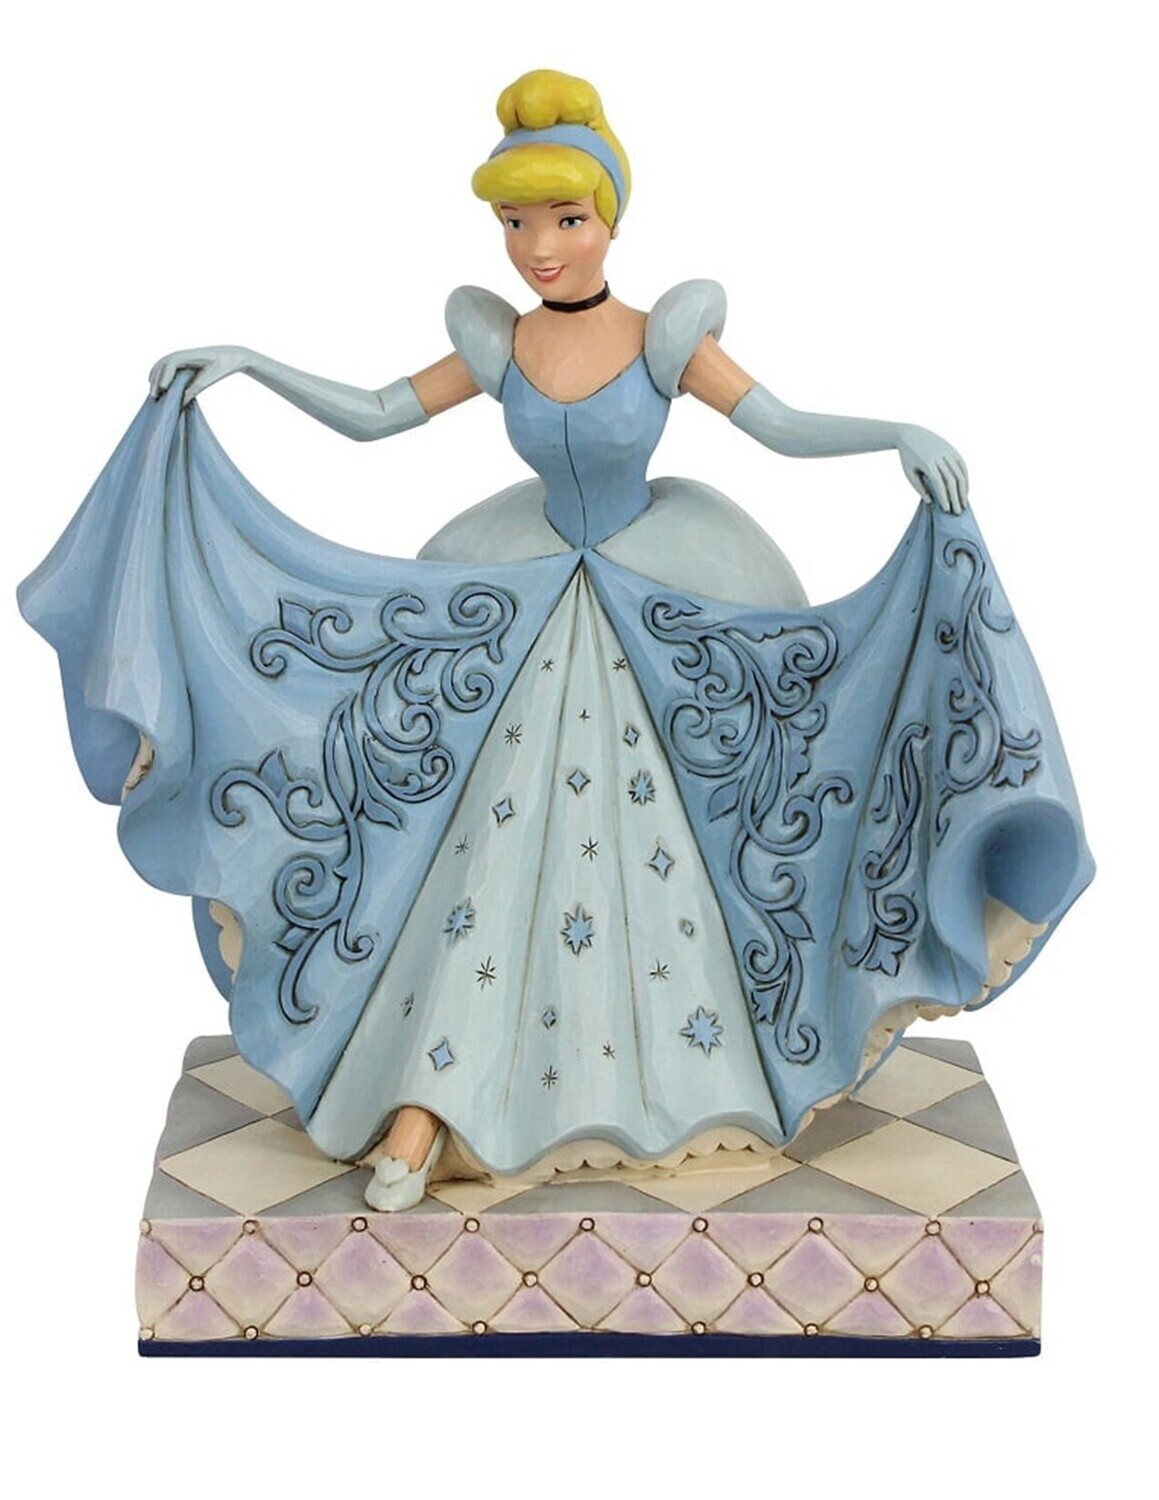 Jim Shore Disney Traditions "A Wonderful Dream Come True" Cinderella Figurine (6007054)